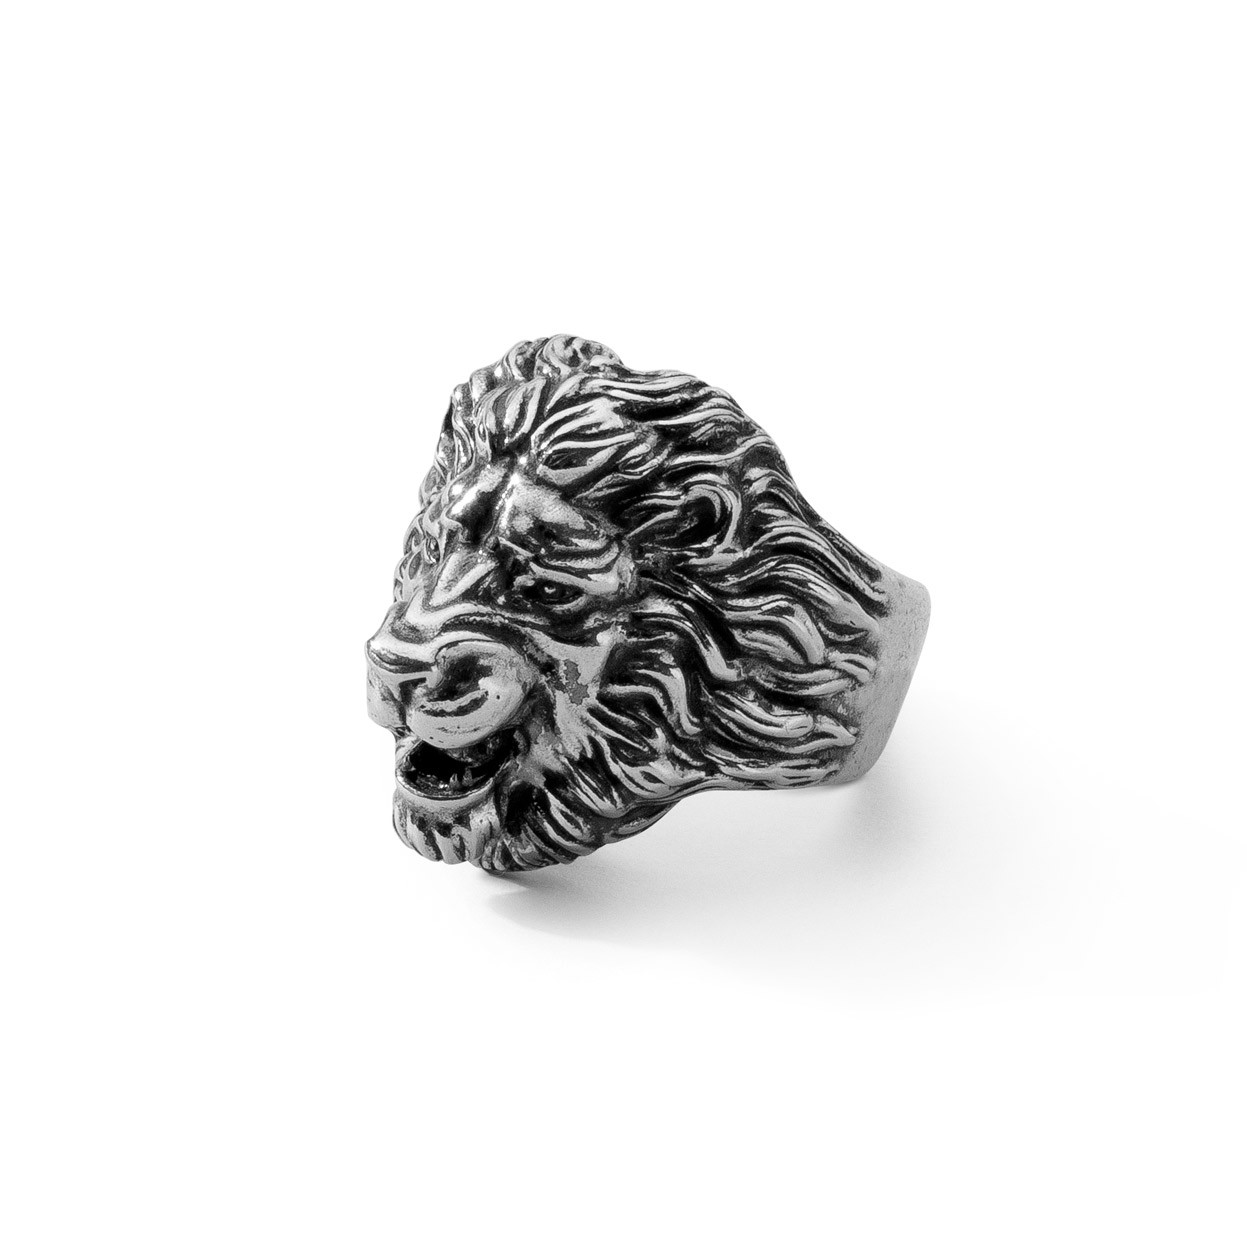 Lion signet, sterling silver 925